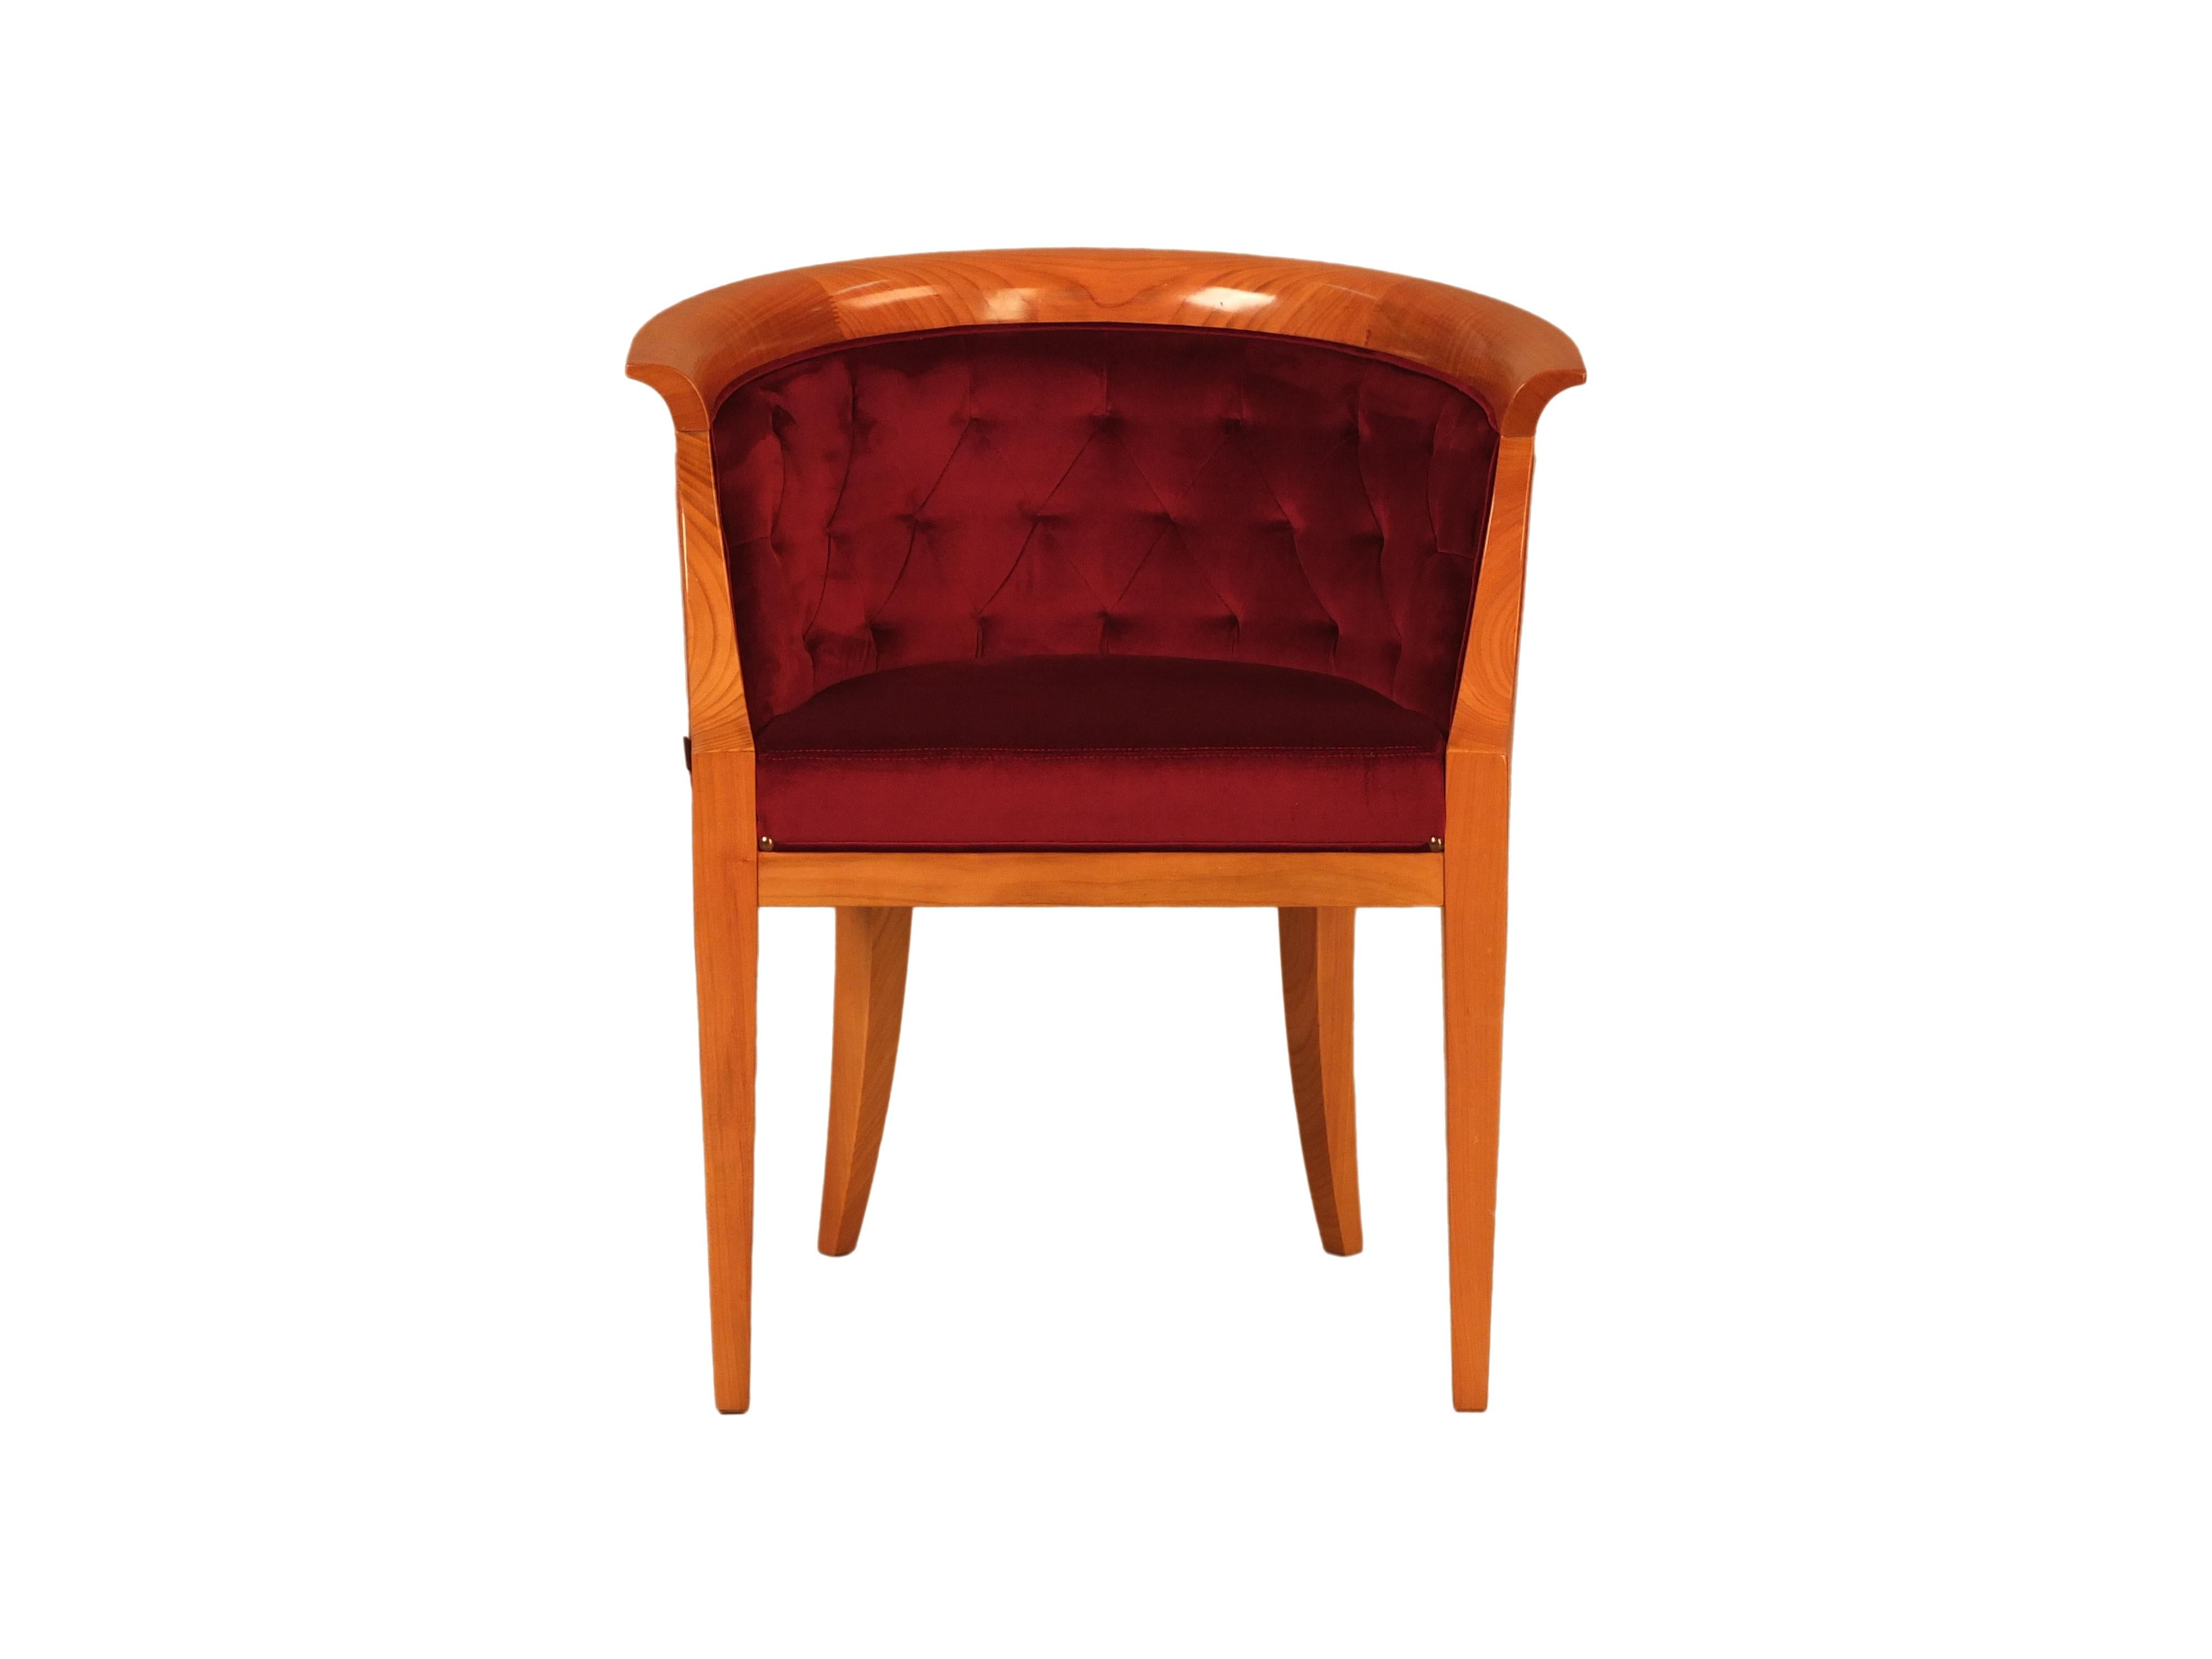 Italian Upholstered Armchair in Biedermeier Style Made of Cherrywood, by Morelato